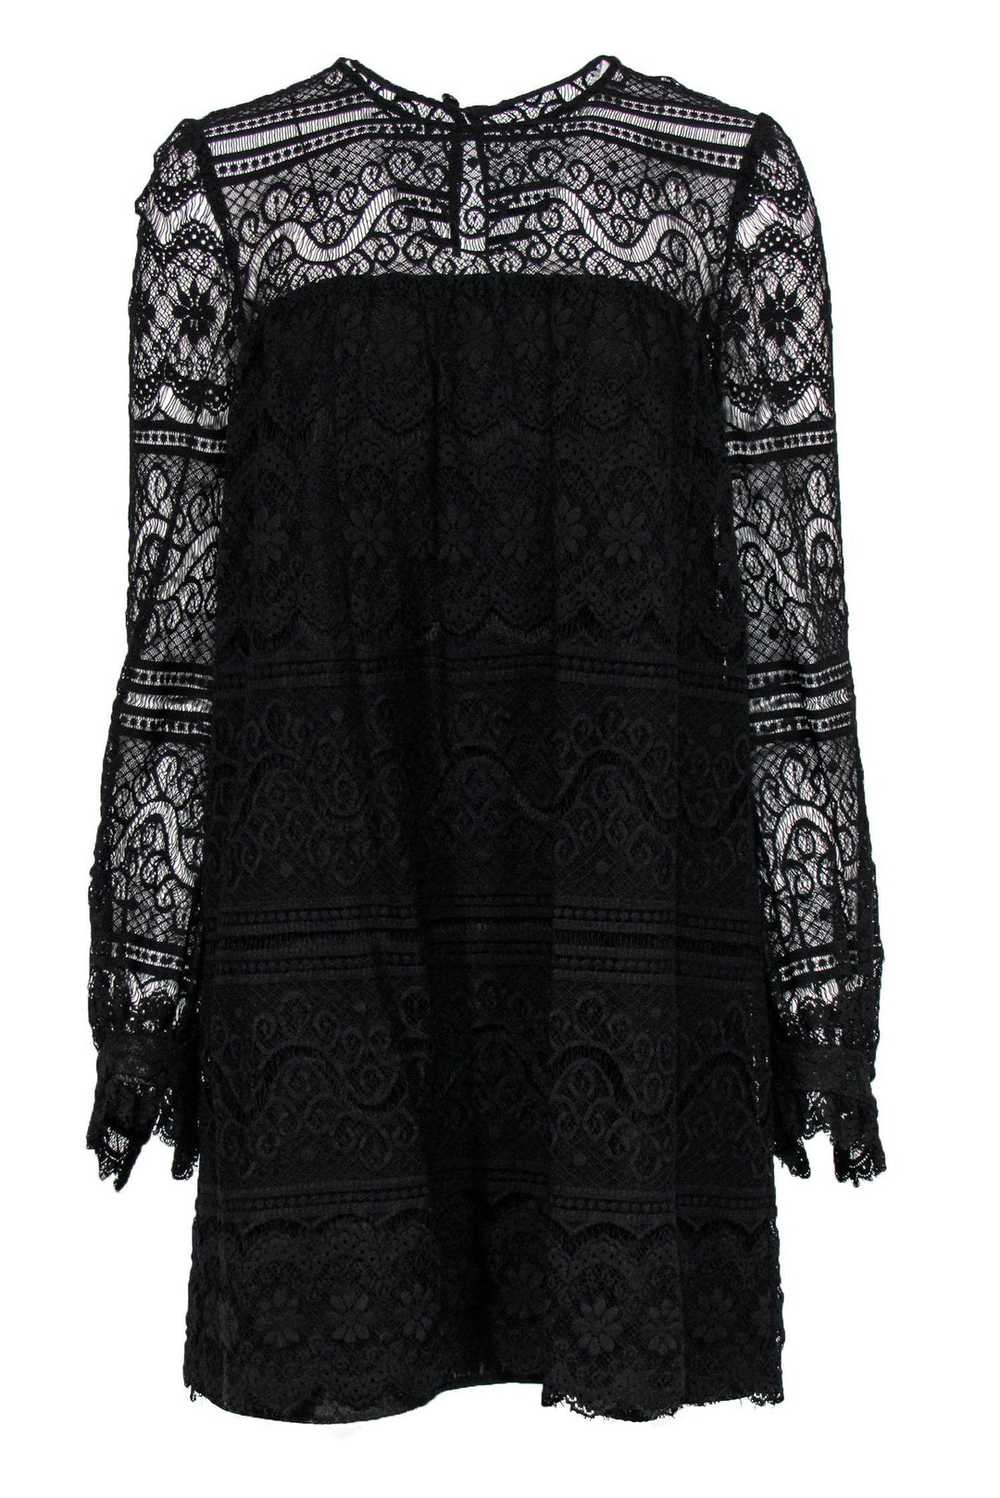 Milly - Black Lace Long Sleeve Shift Dress Sz 8 - image 1